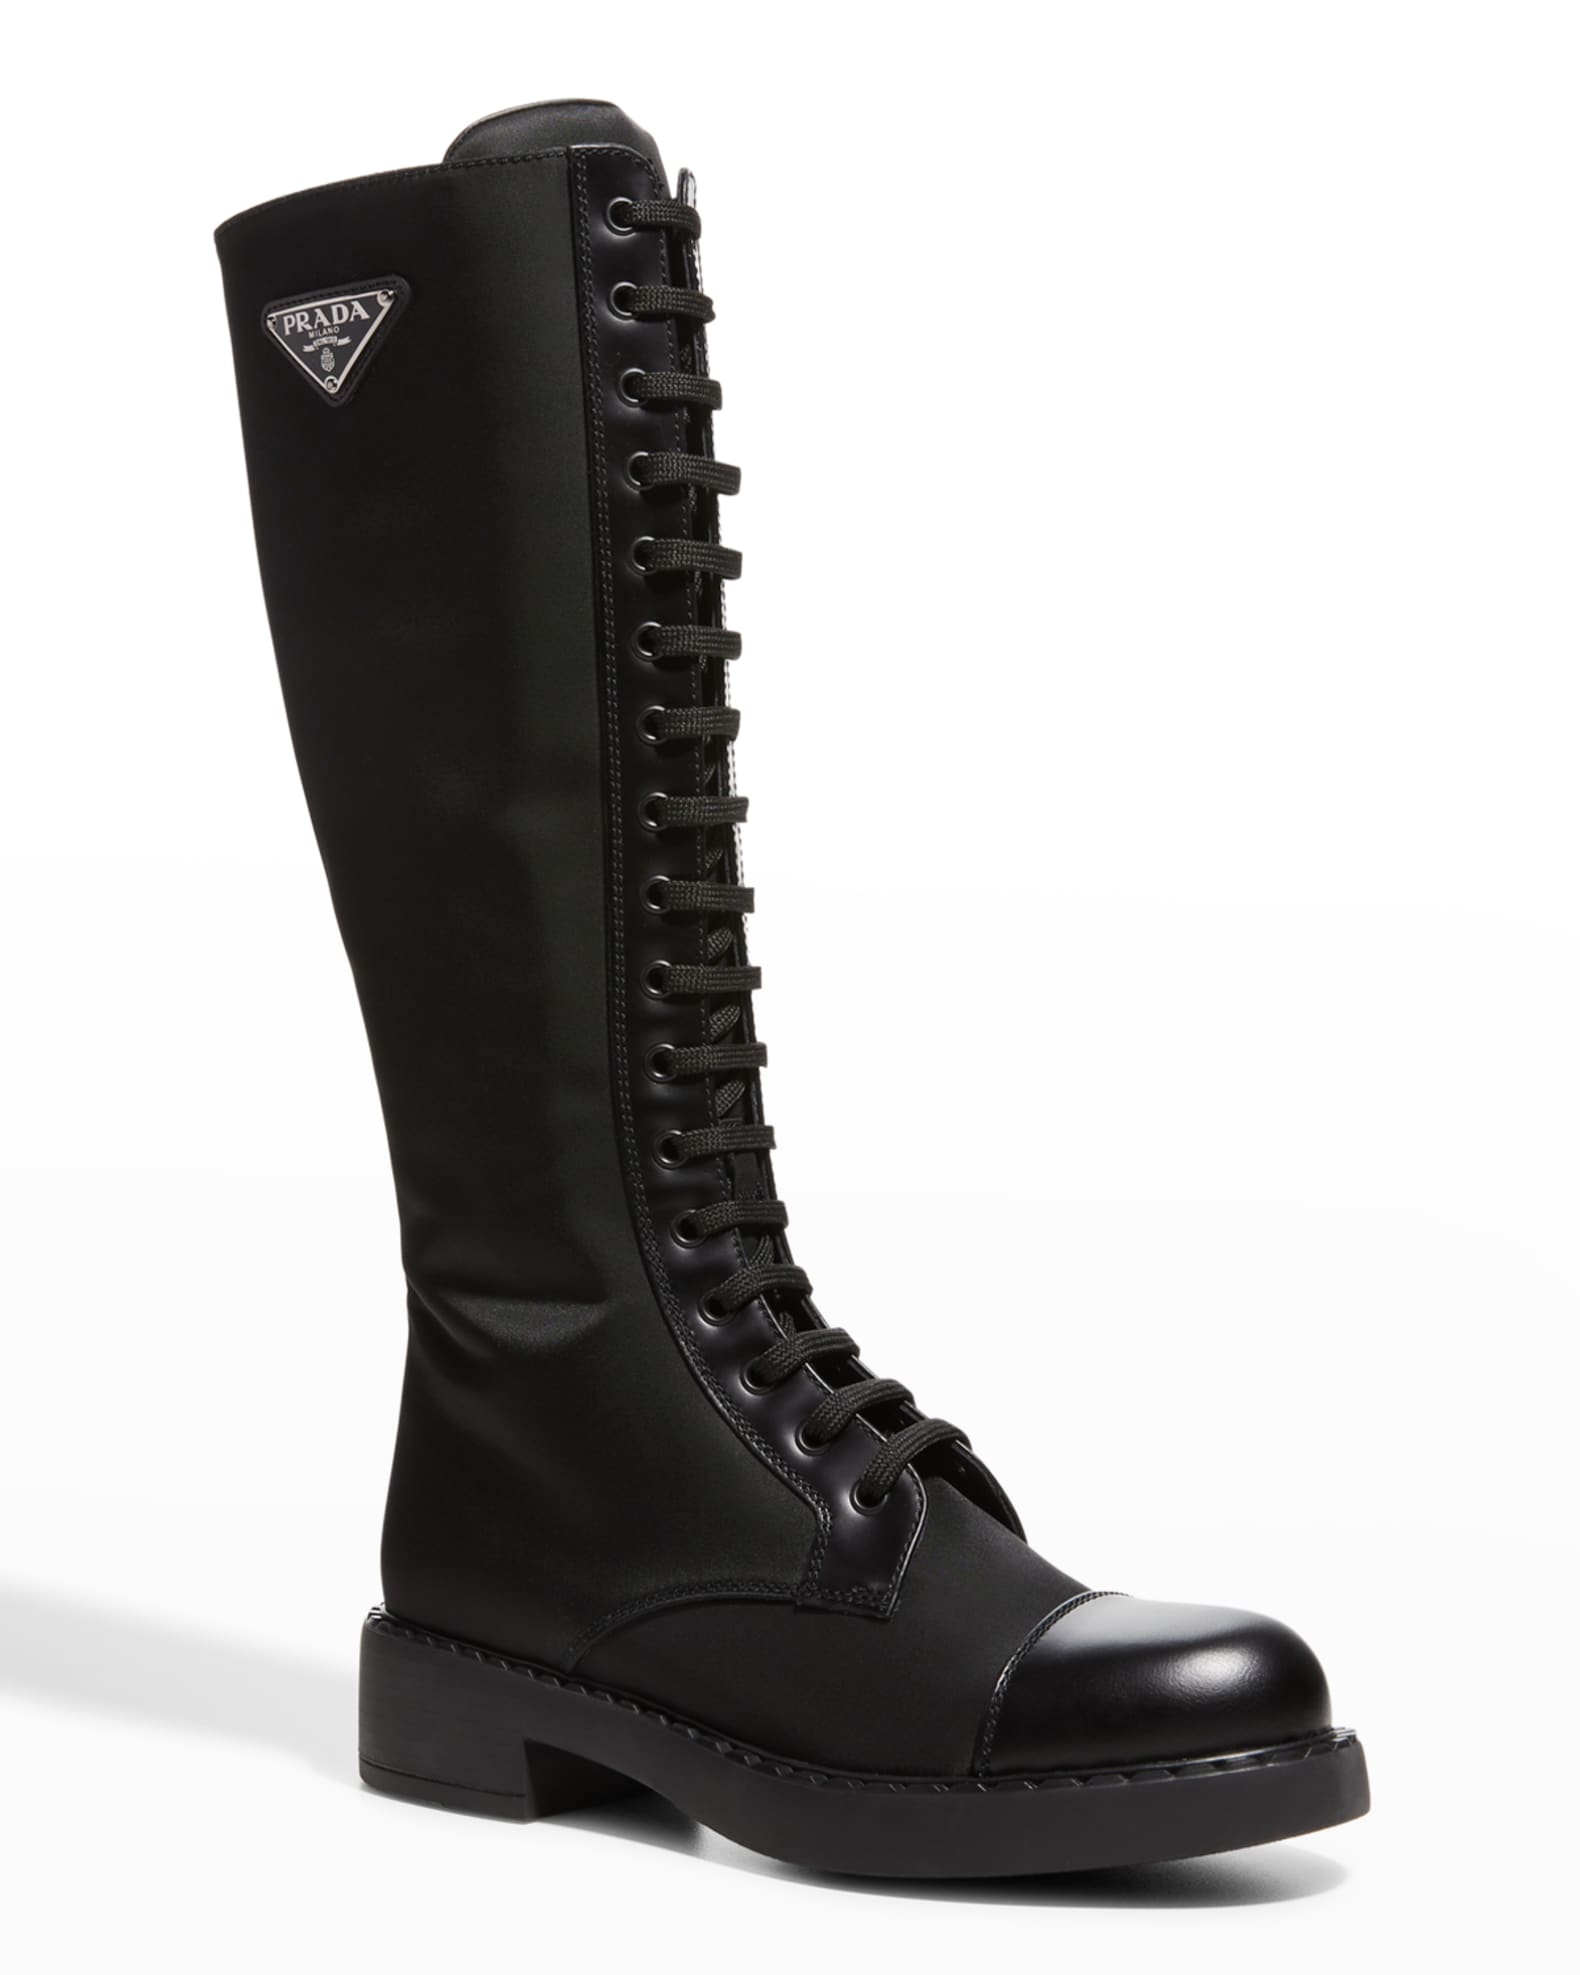 Prada Nylon Tall Lace-Up Combat Boots | Neiman Marcus